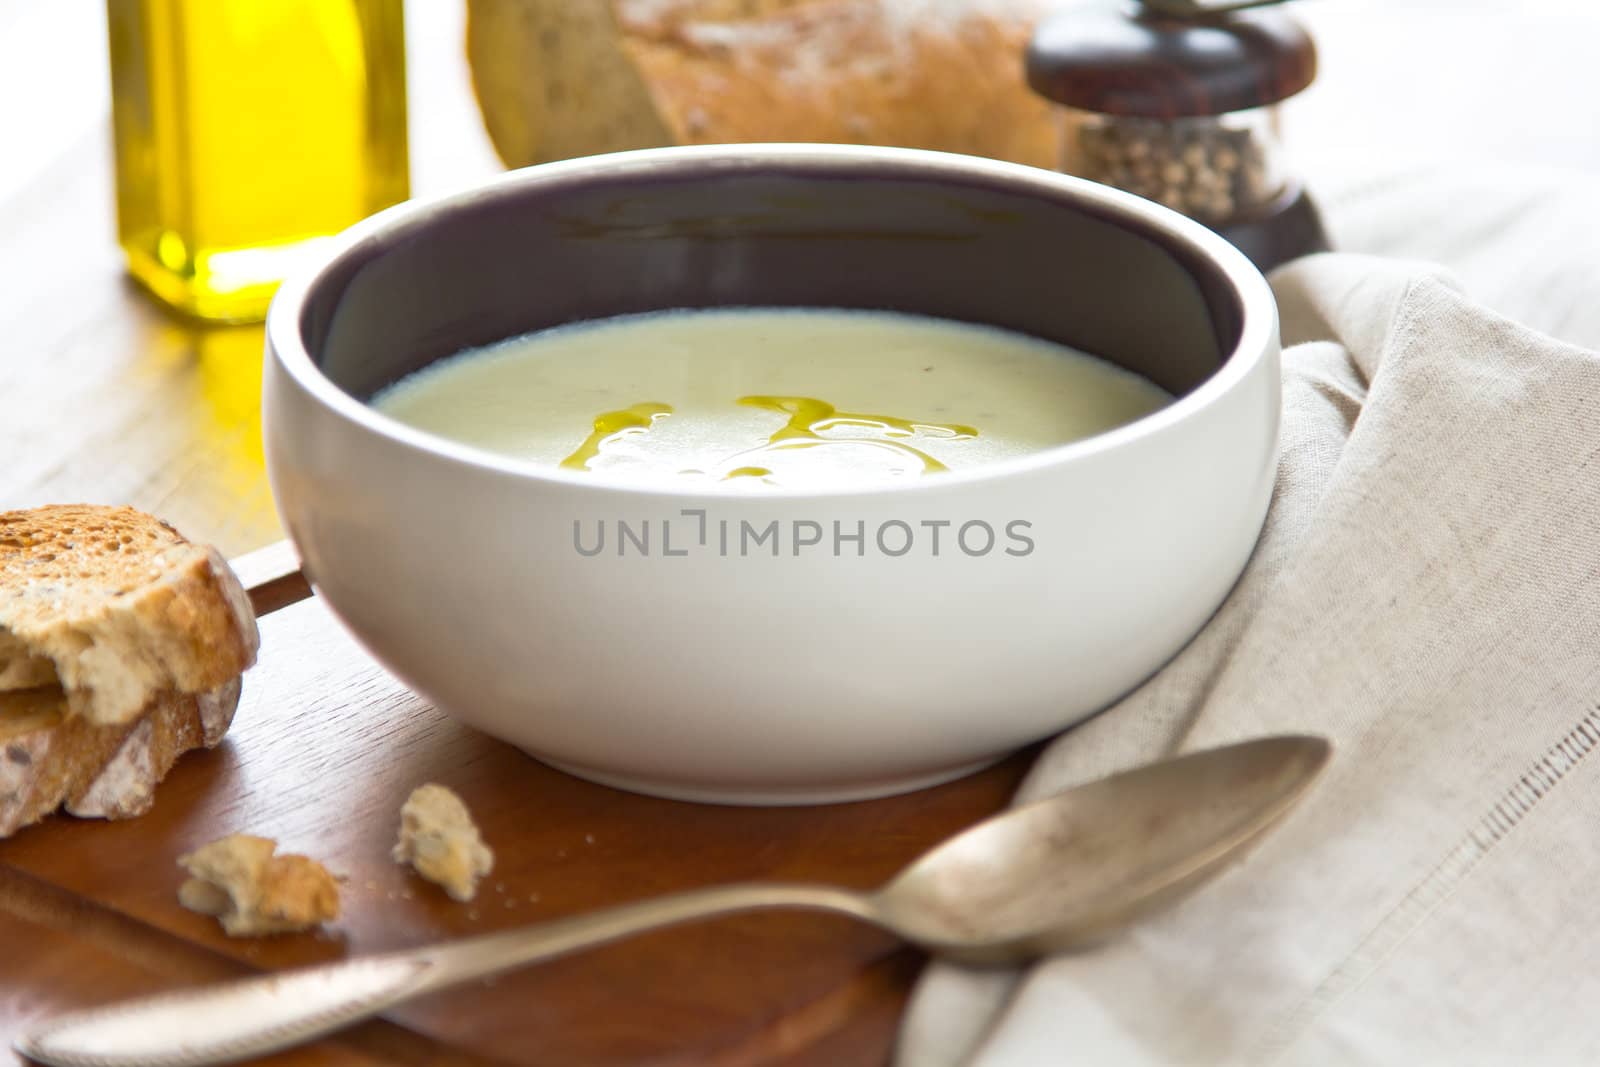 Cauliflower soup by vanillaechoes